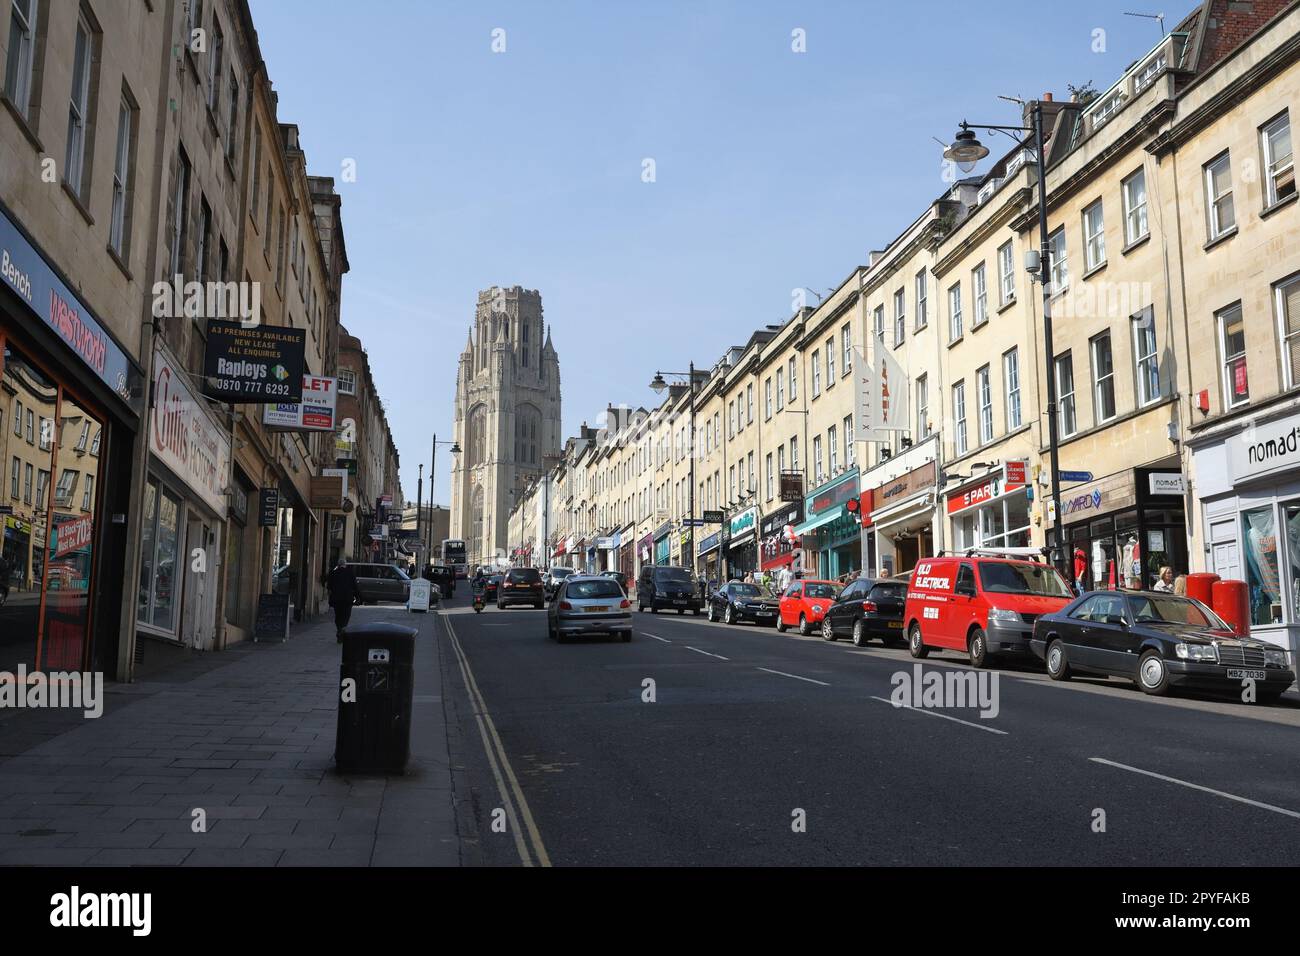 Park street in Bristol city centre, England UK, Shops in Georgian buildings Stock Photo